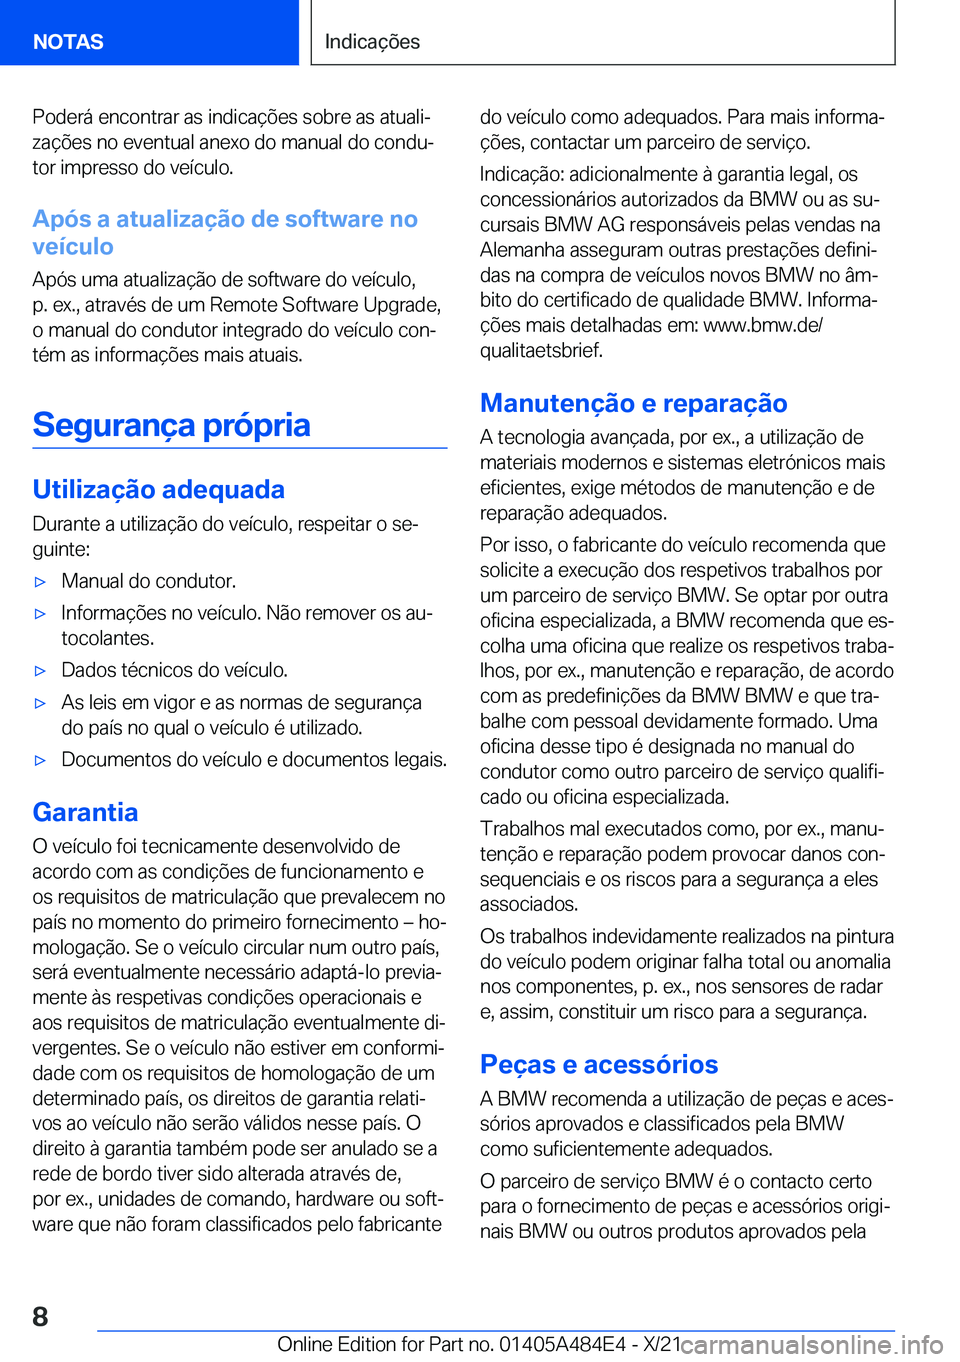 BMW 7 SERIES 2022  Manual do condutor (in Portuguese) �P�o�d�e�r�á��e�n�c�o�n�t�r�a�r��a�s��i�n�d�i�c�a�